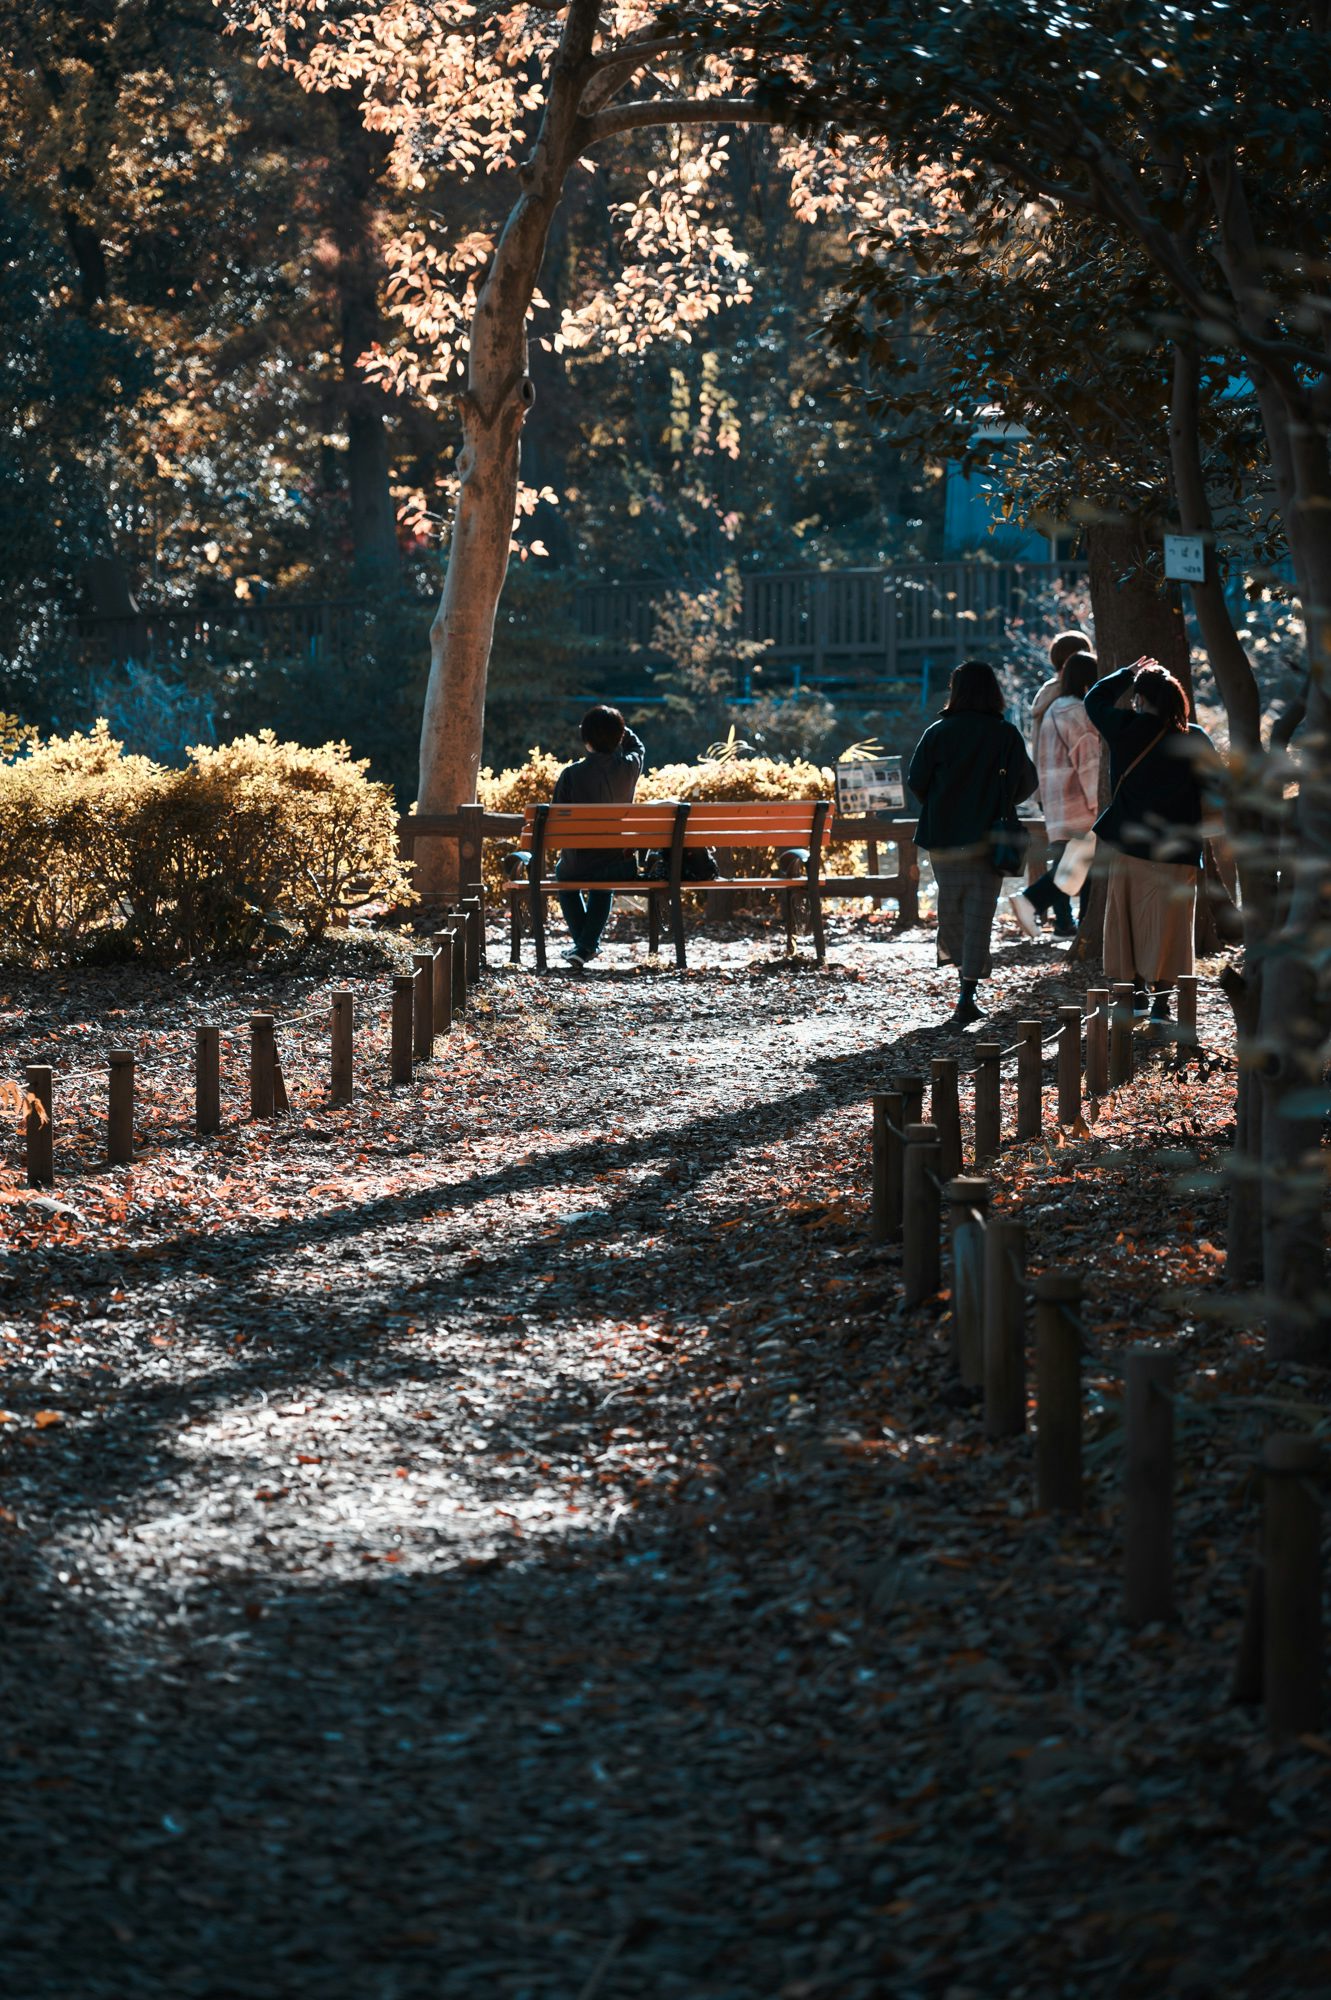 「Autumn」という多分 DxO FilmPack オリジナルのシミュレーション